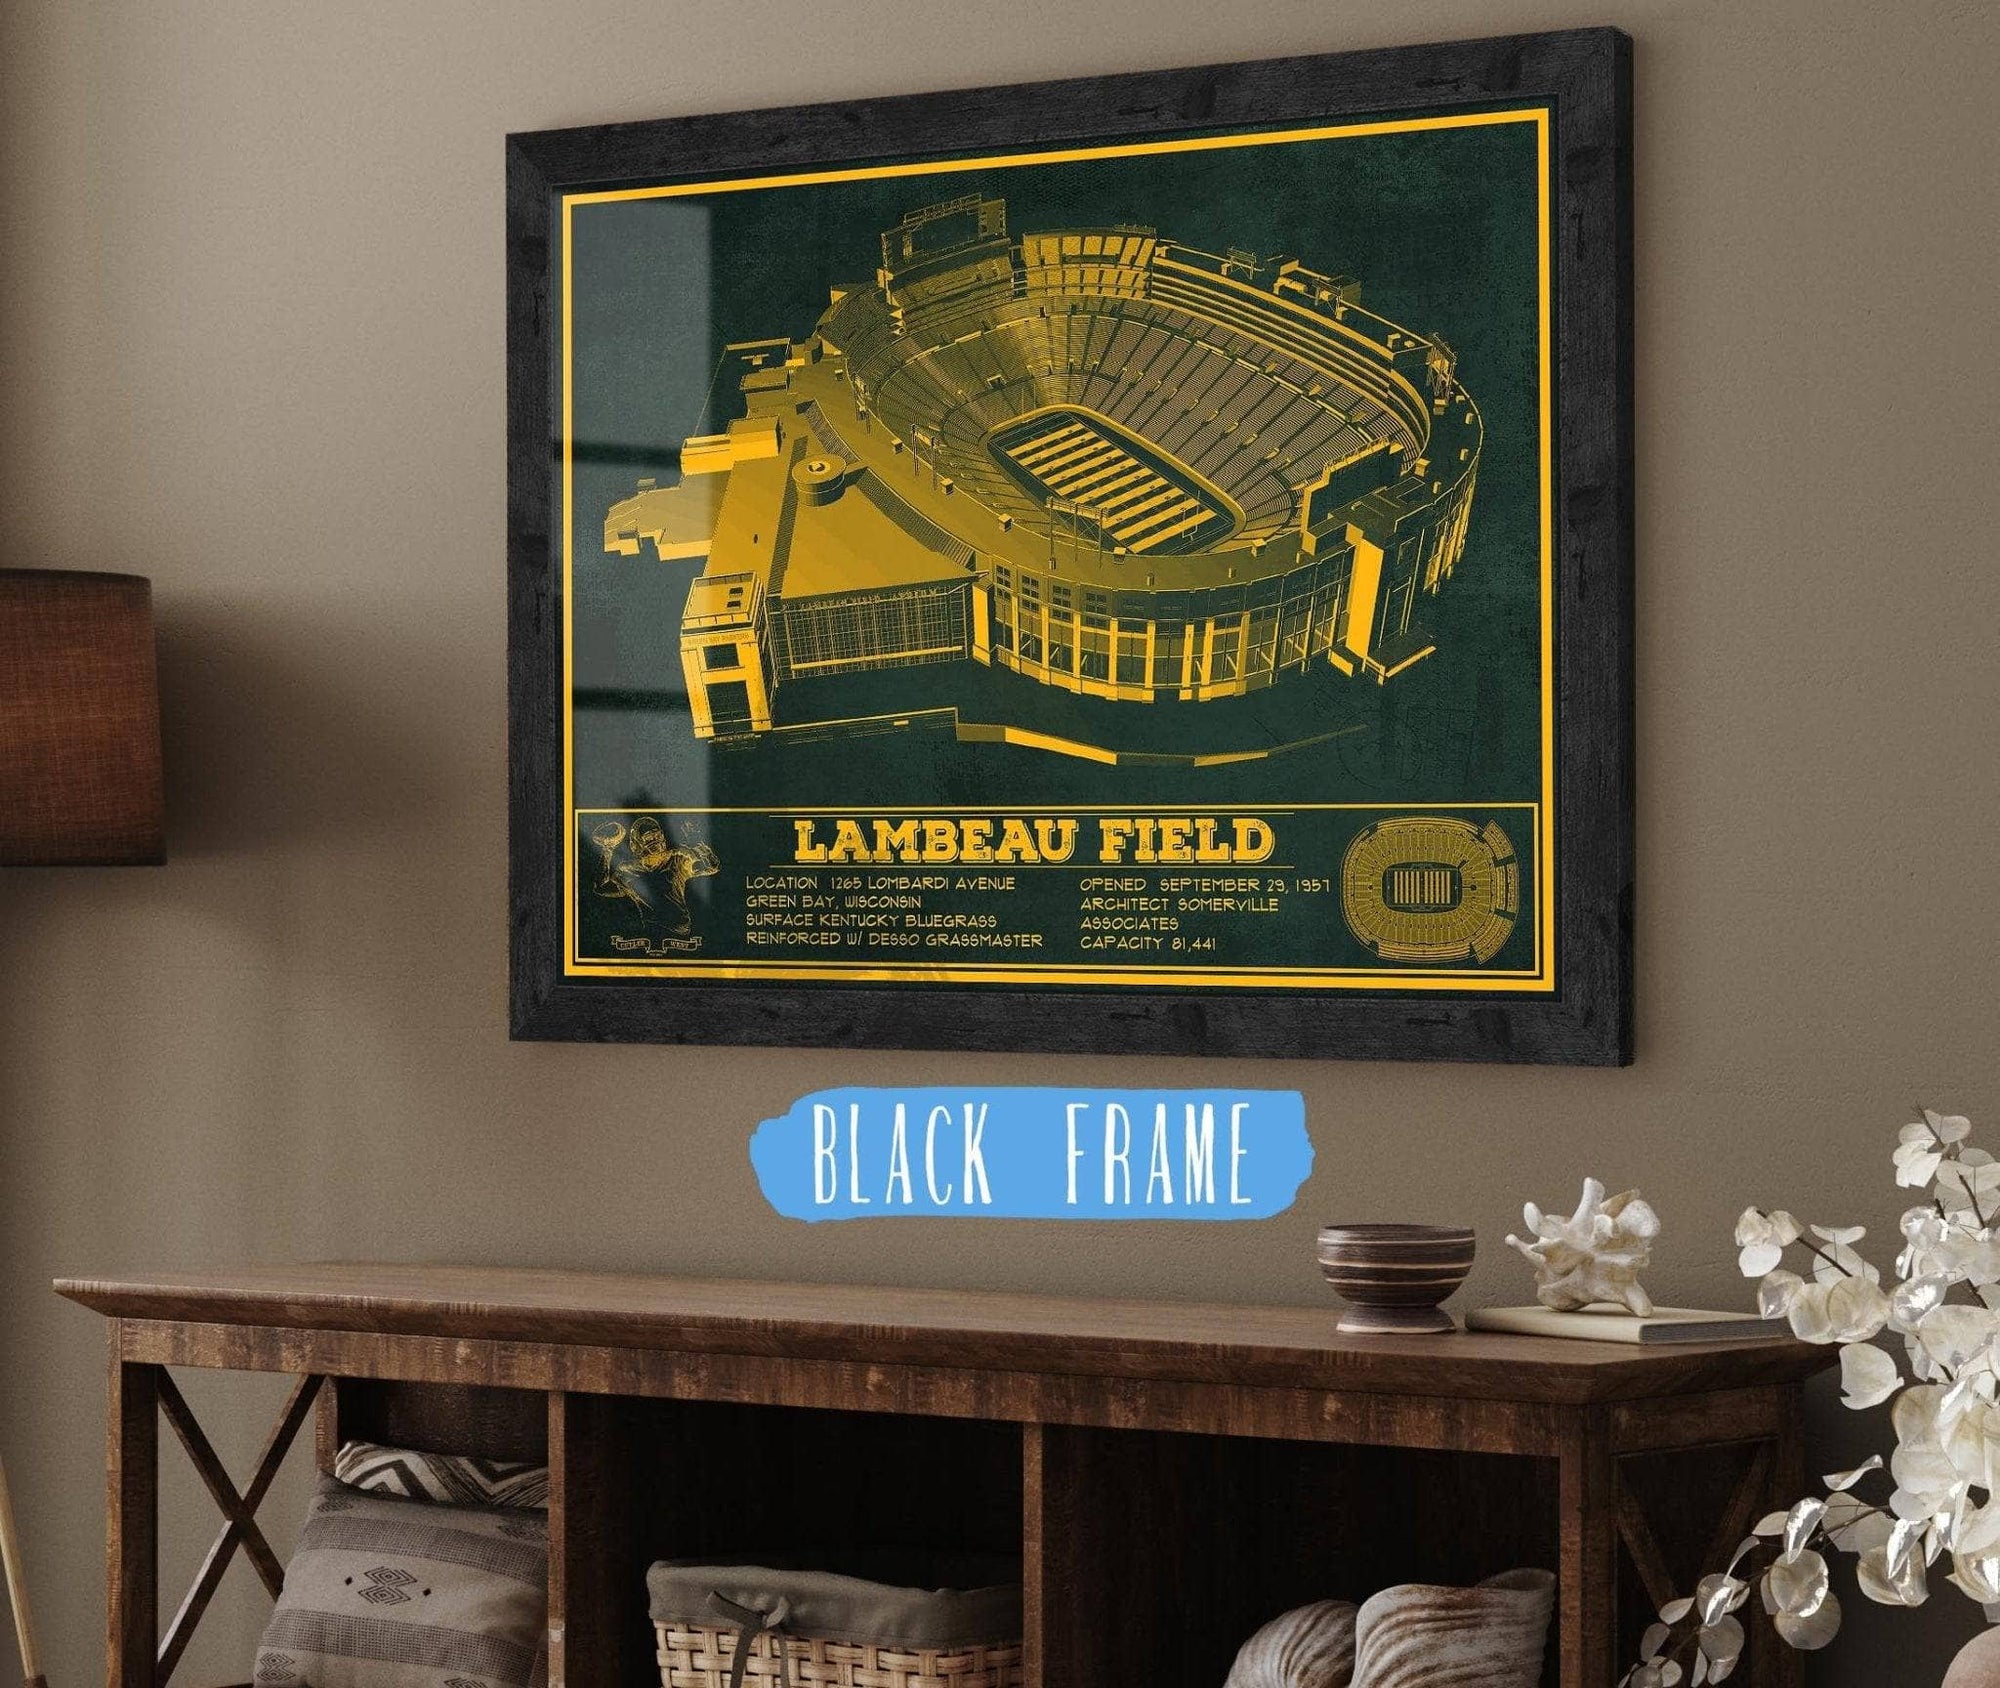 Cutler West Pro Football Collection 14" x 11" / Black Frame Green Bay Packers - Lambeau Field Vintage Football Print 698877220-TEAM